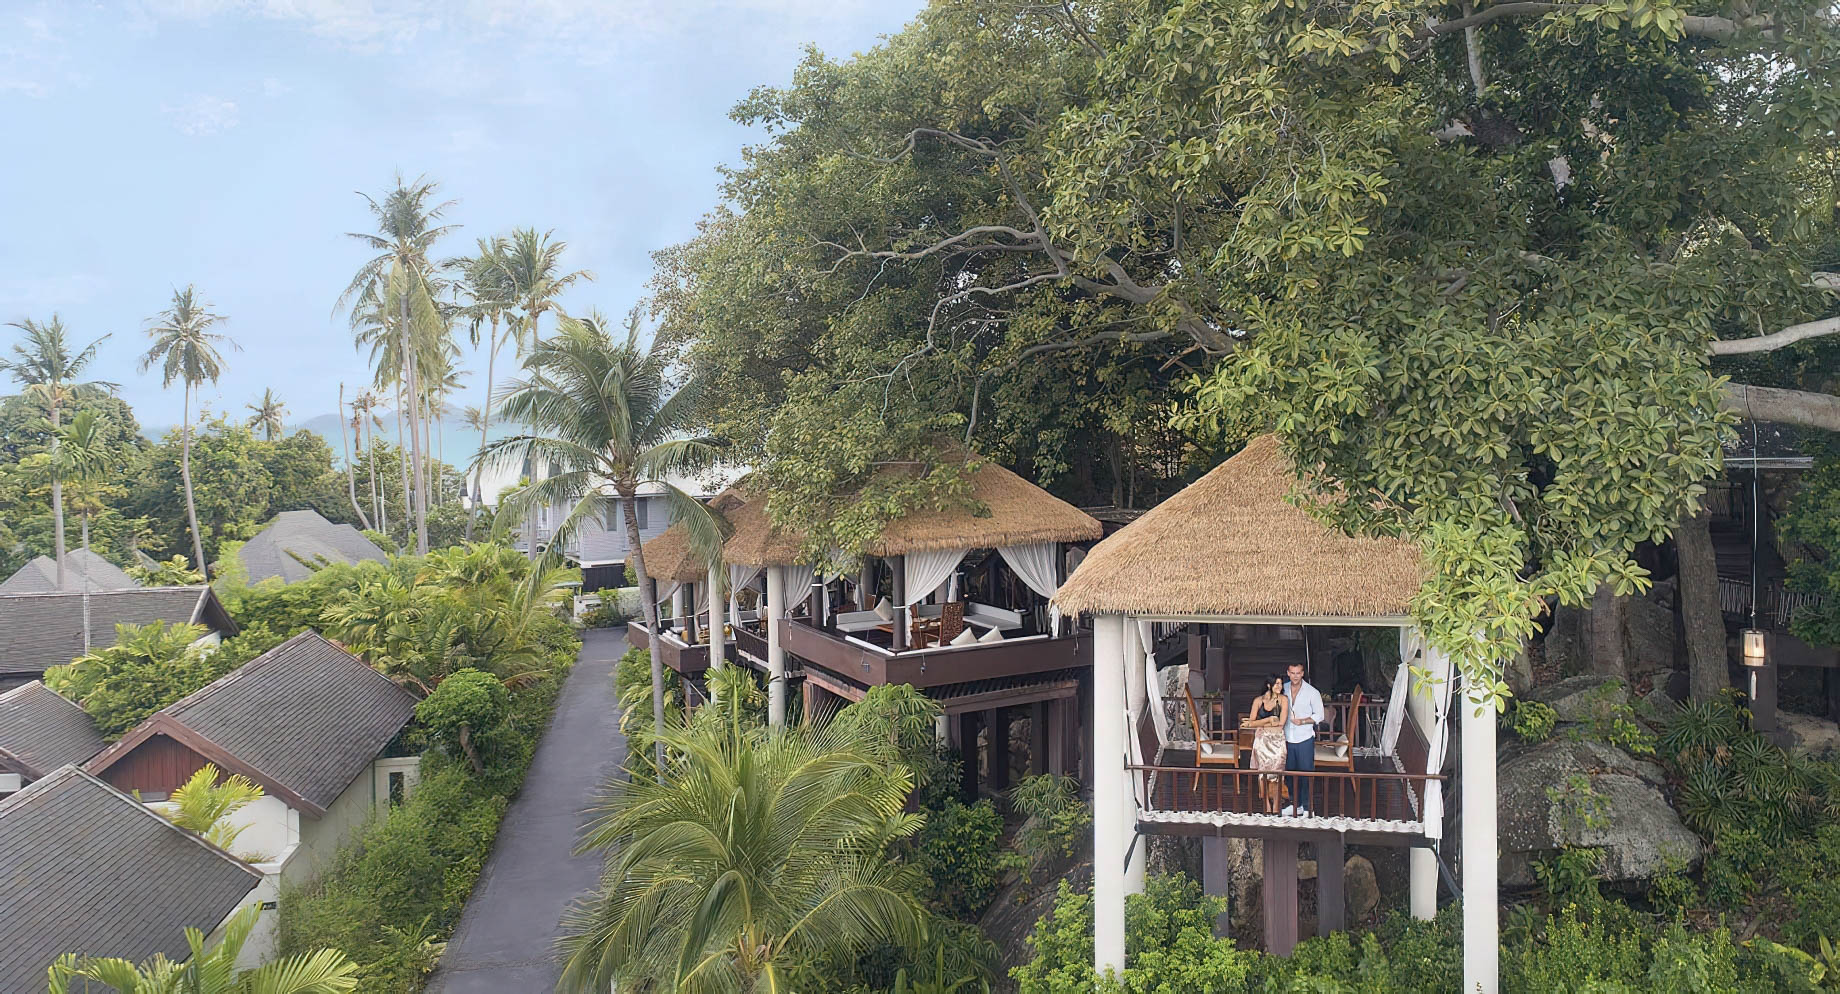 Anantara Lawana Koh Samui Resort - Thailand - Tree Tops Signature Restaurant